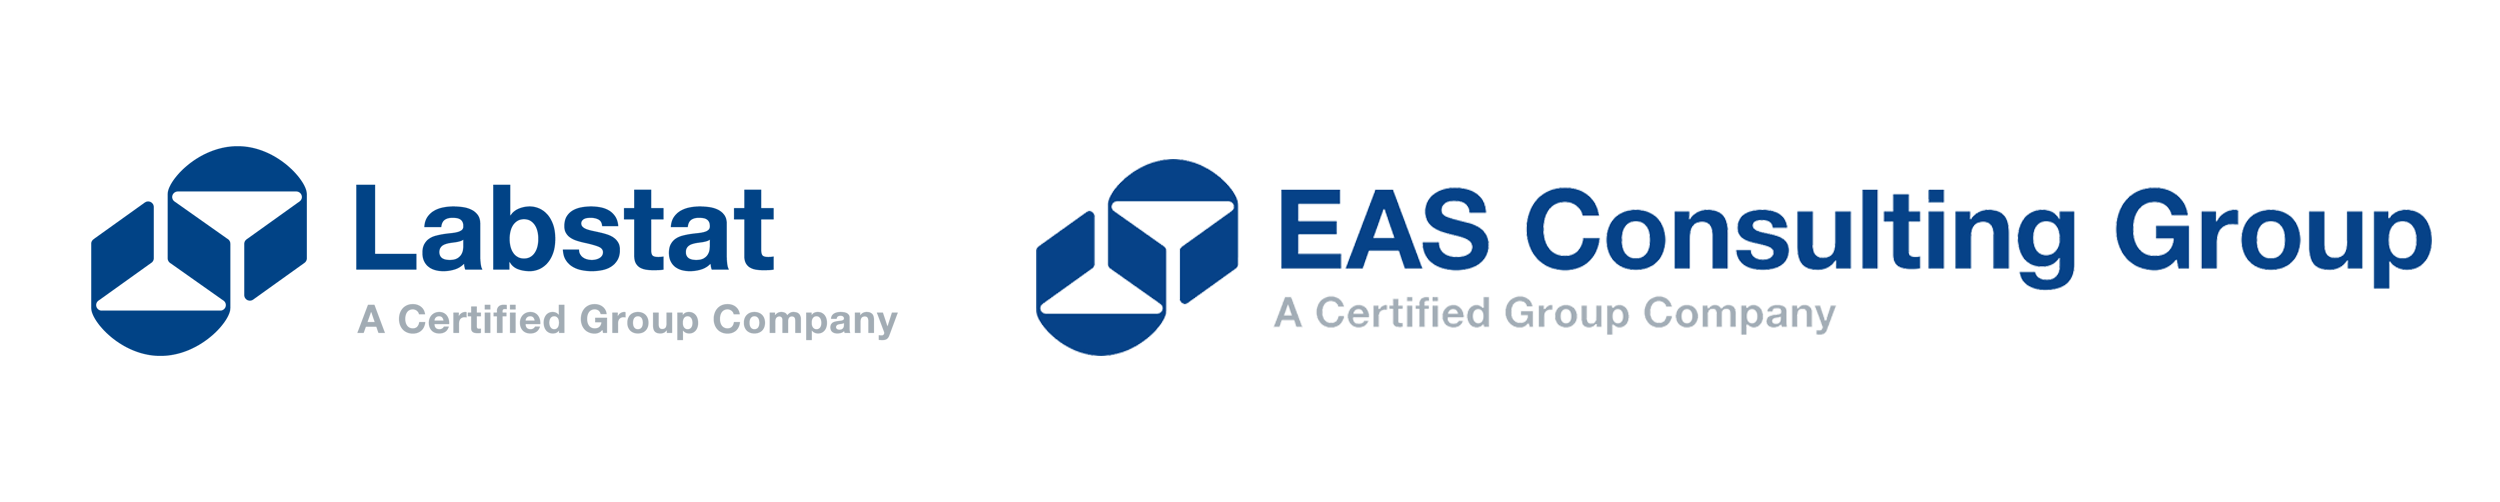 EAS+Labstat branding